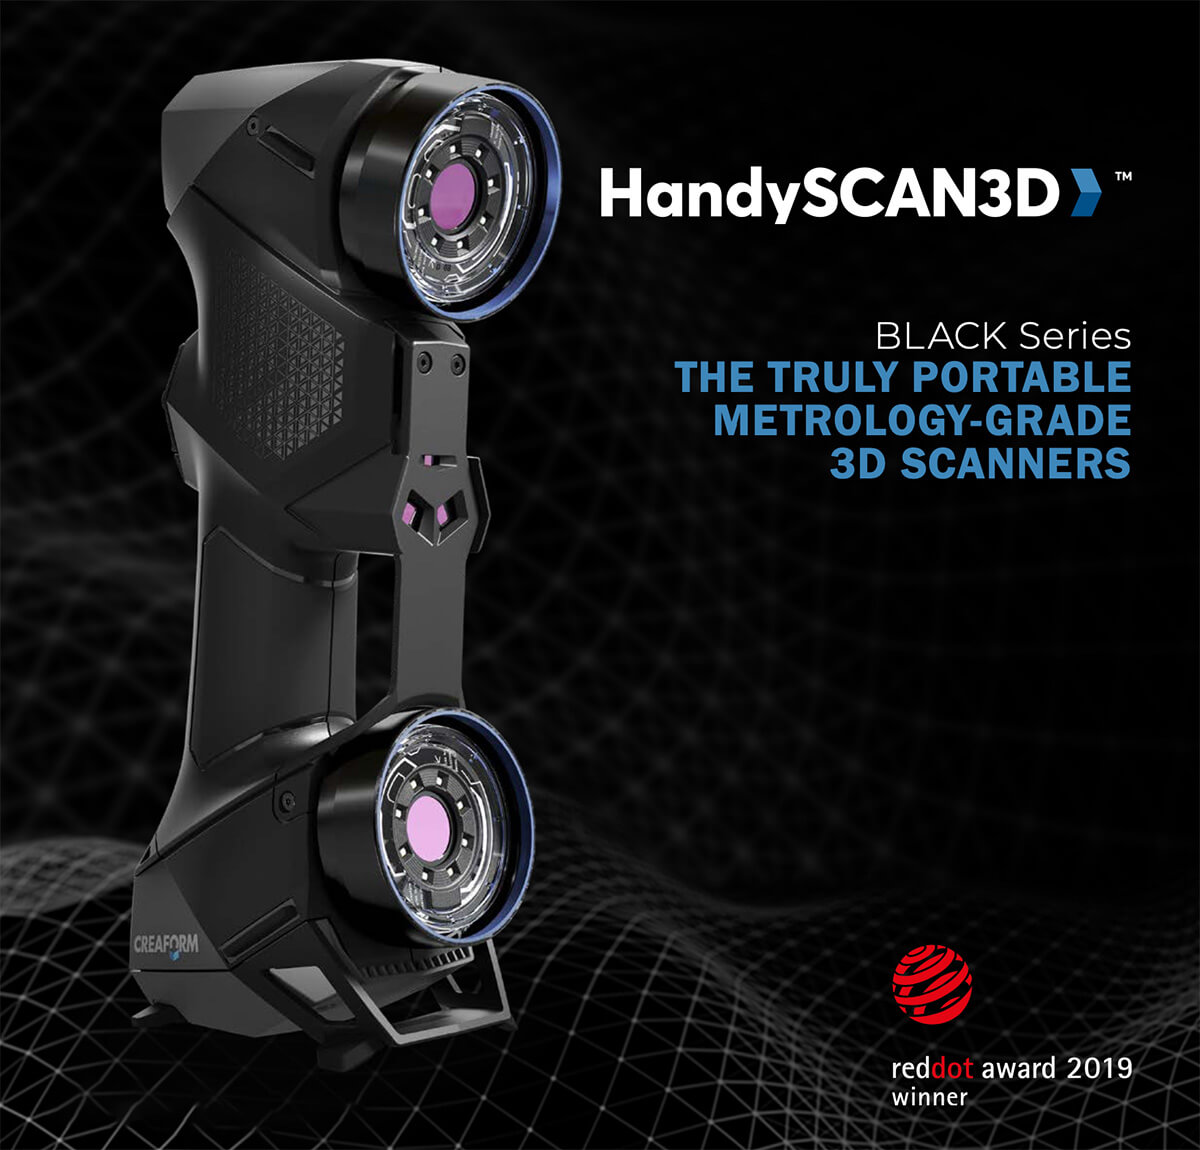 HandySCAN3D black series. The truly portable metrology-grade 3d scanners. Red dot award 2019 winner